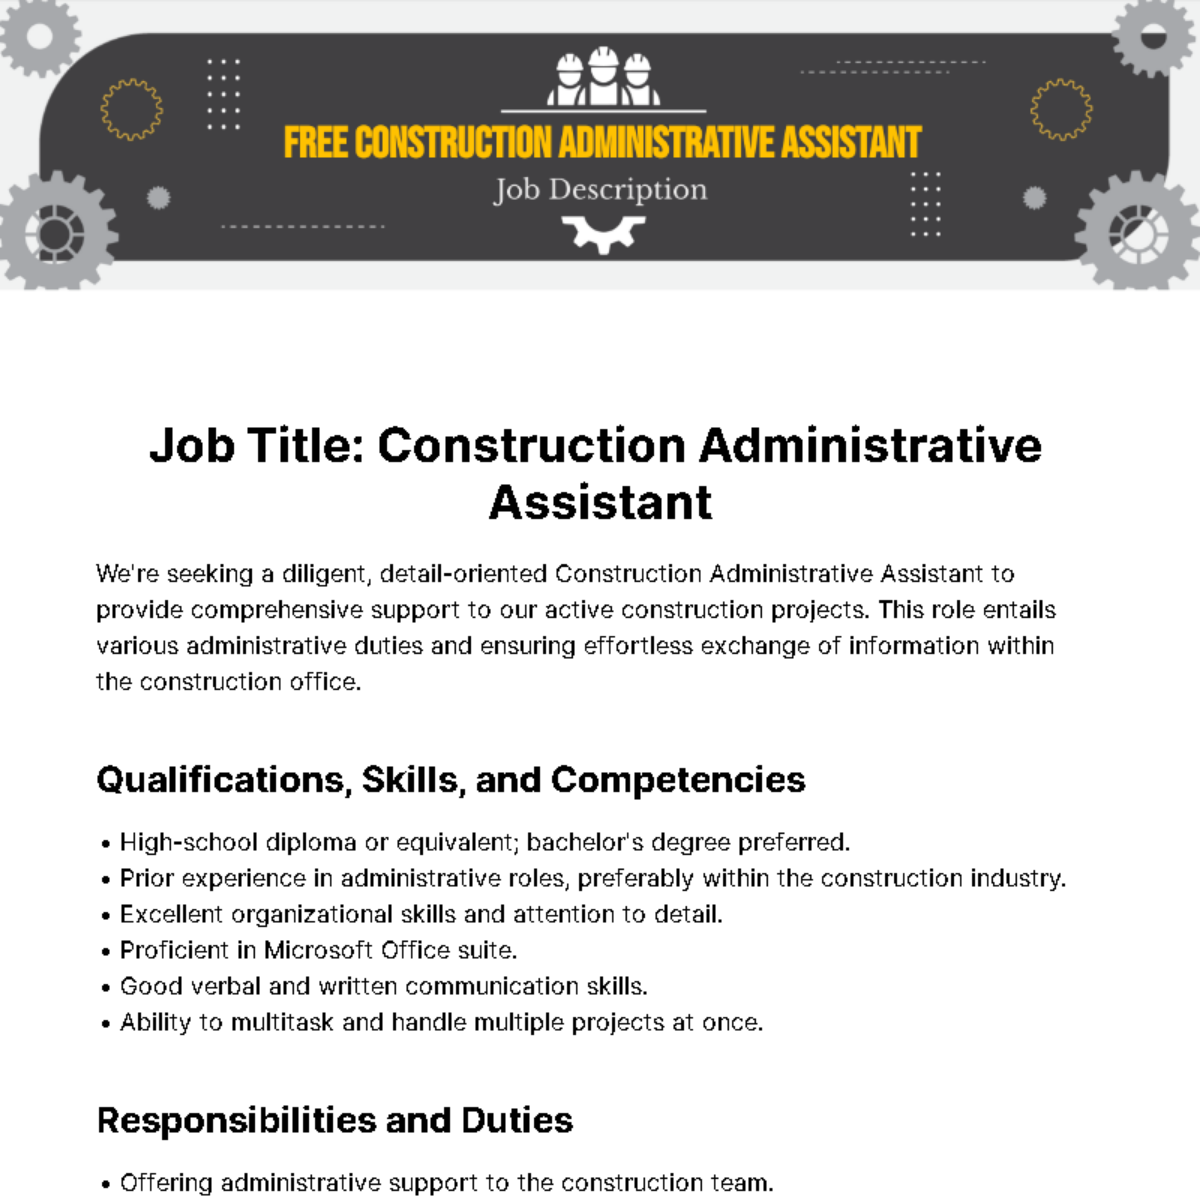 Free Construction Administrative Assistant Job Description Template